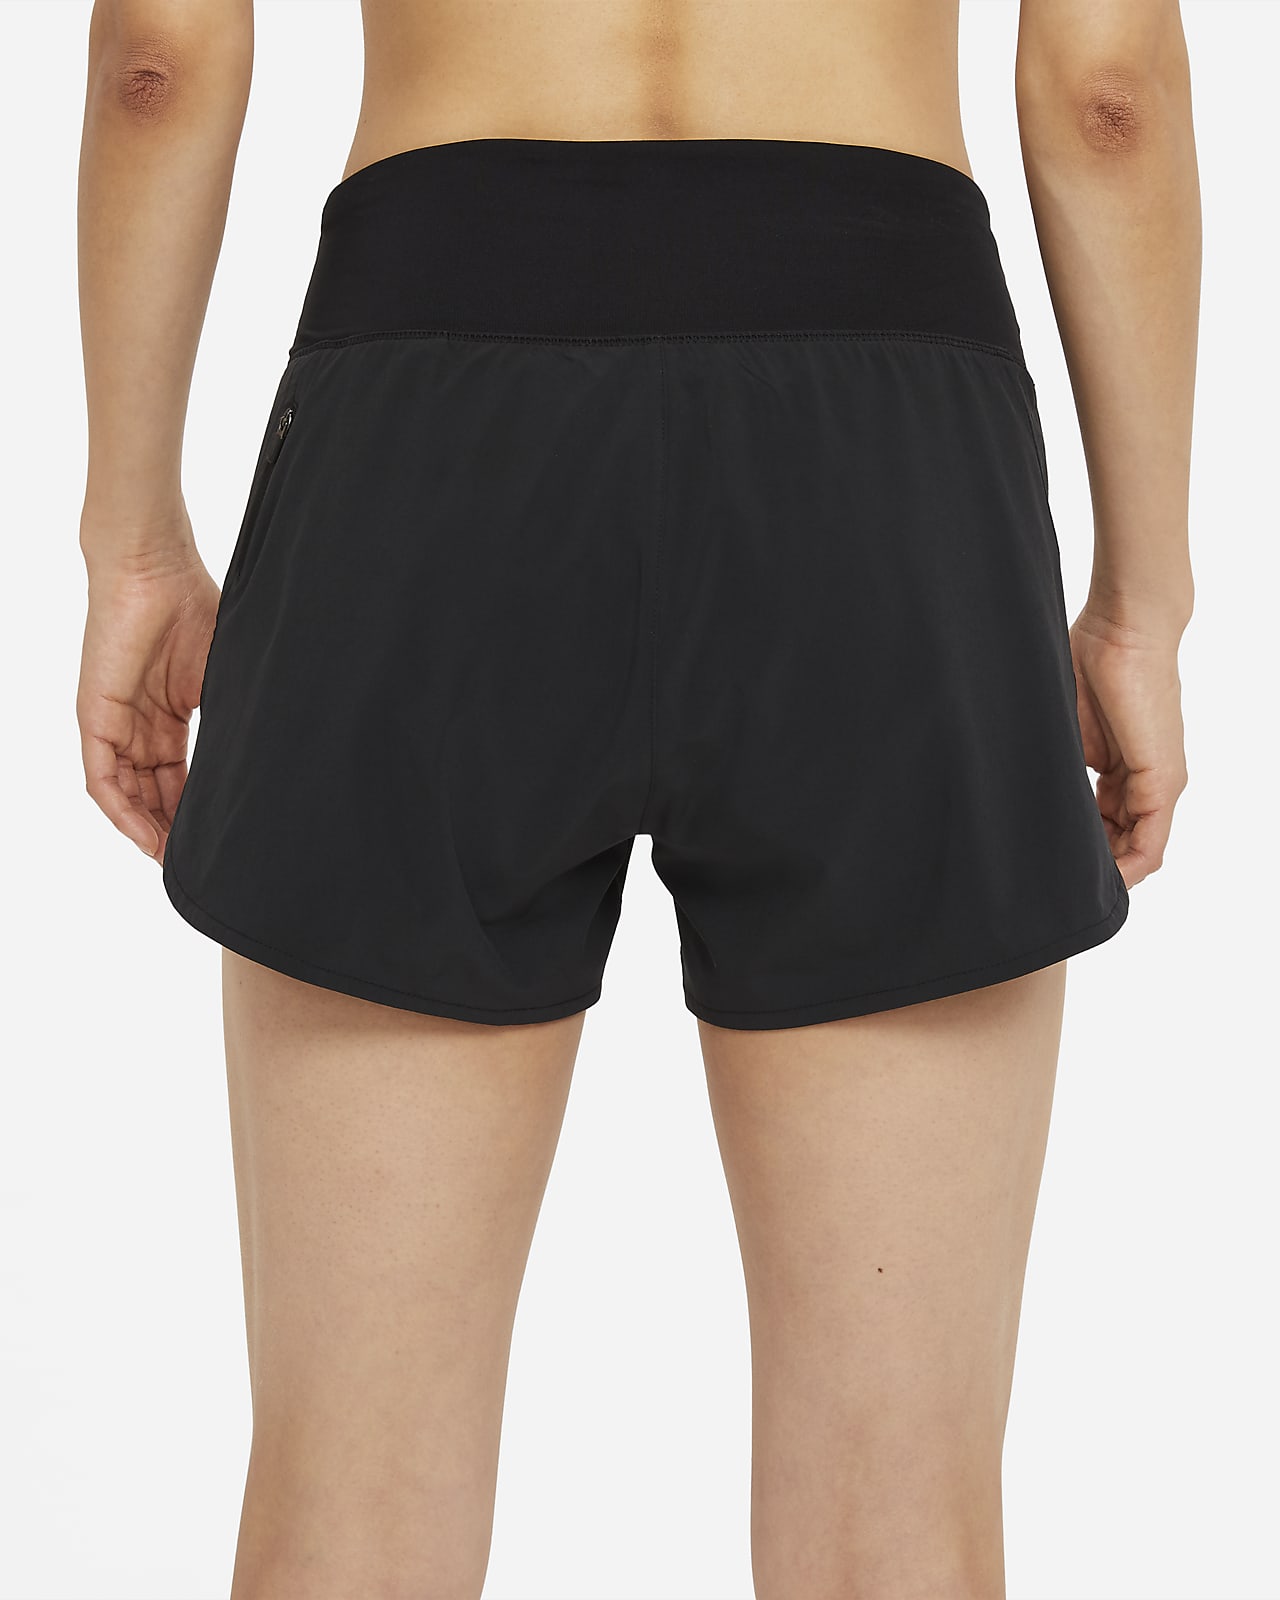 Running Shorts. Nike JP